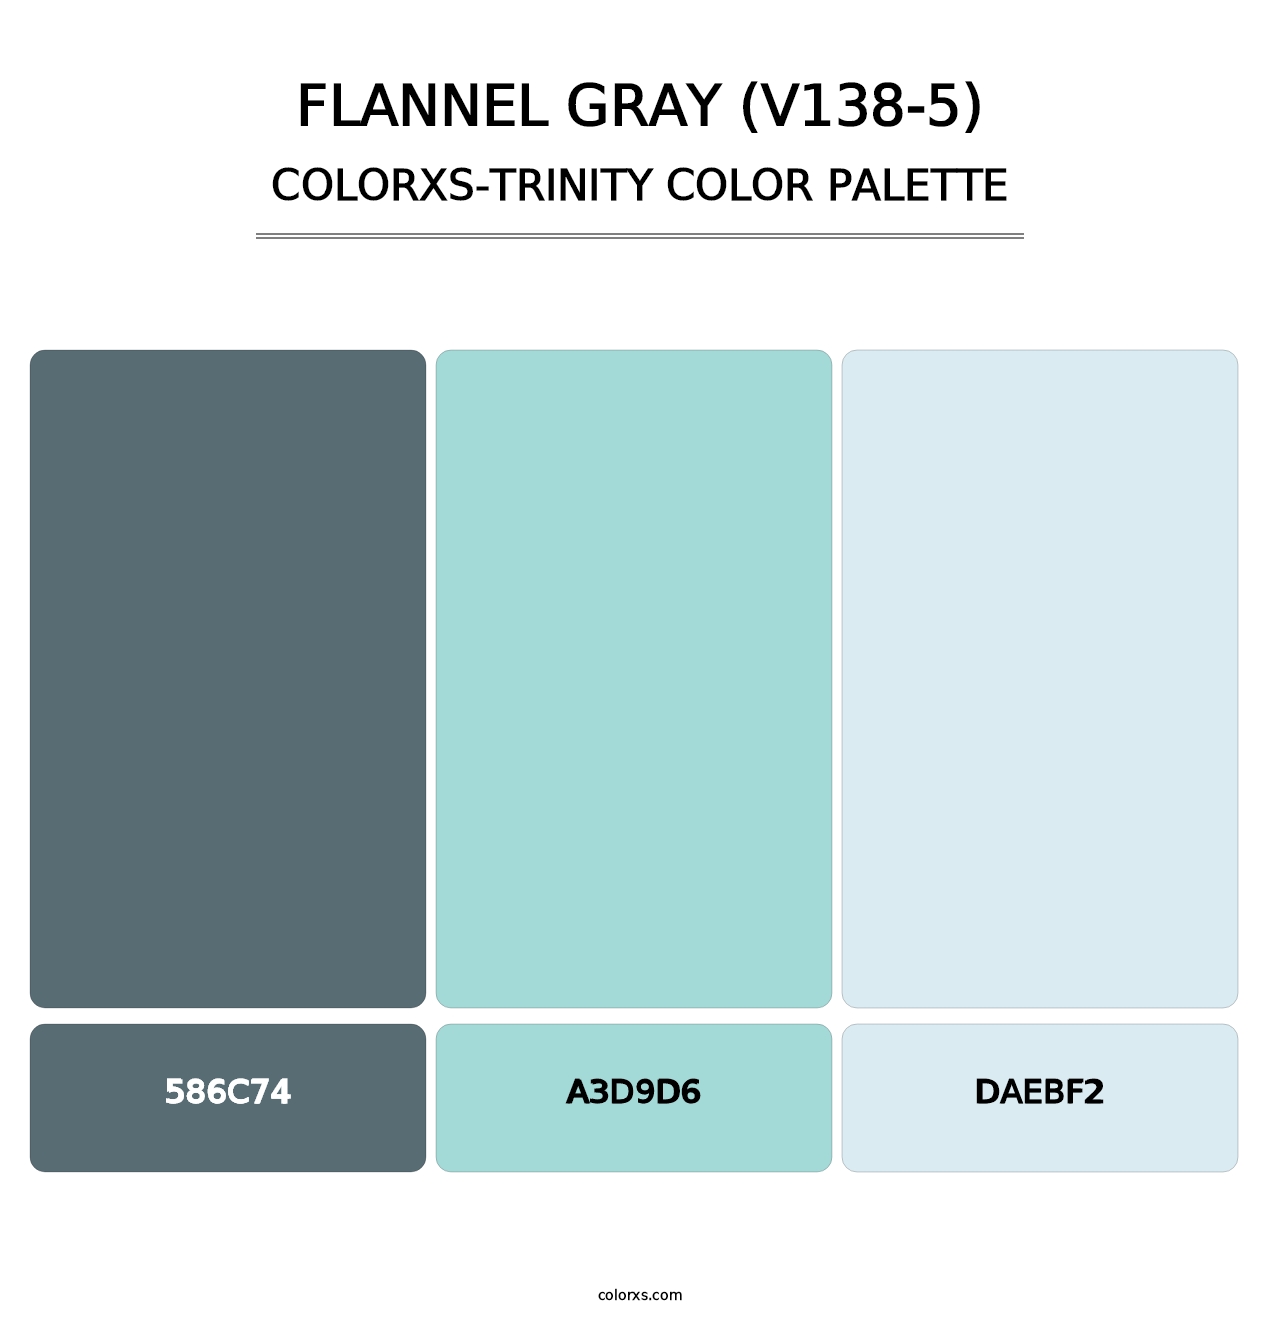 Flannel Gray (V138-5) - Colorxs Trinity Palette